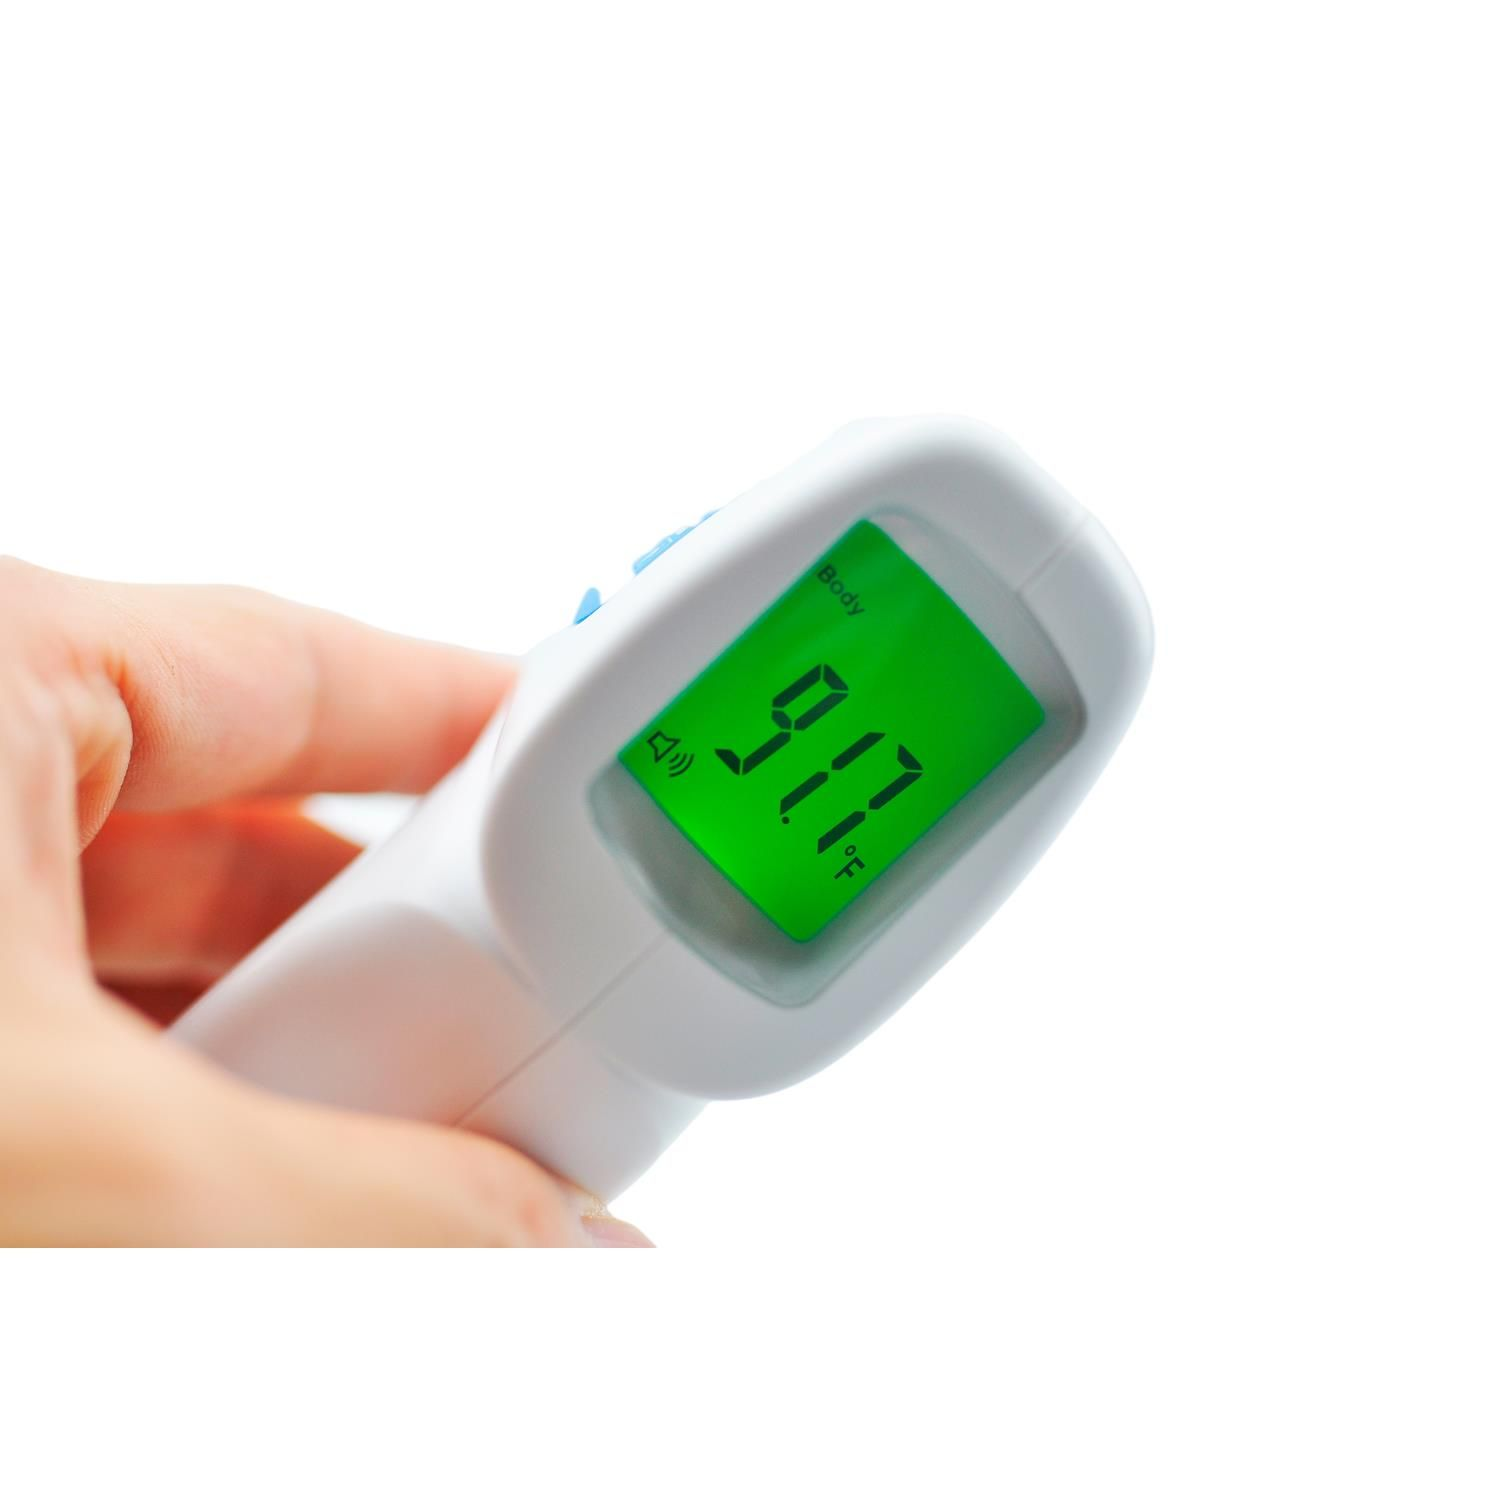 TELEROPA BASICS IT 5 Fieberthermometer (Messart: kontaktlose Infrarotmessung)